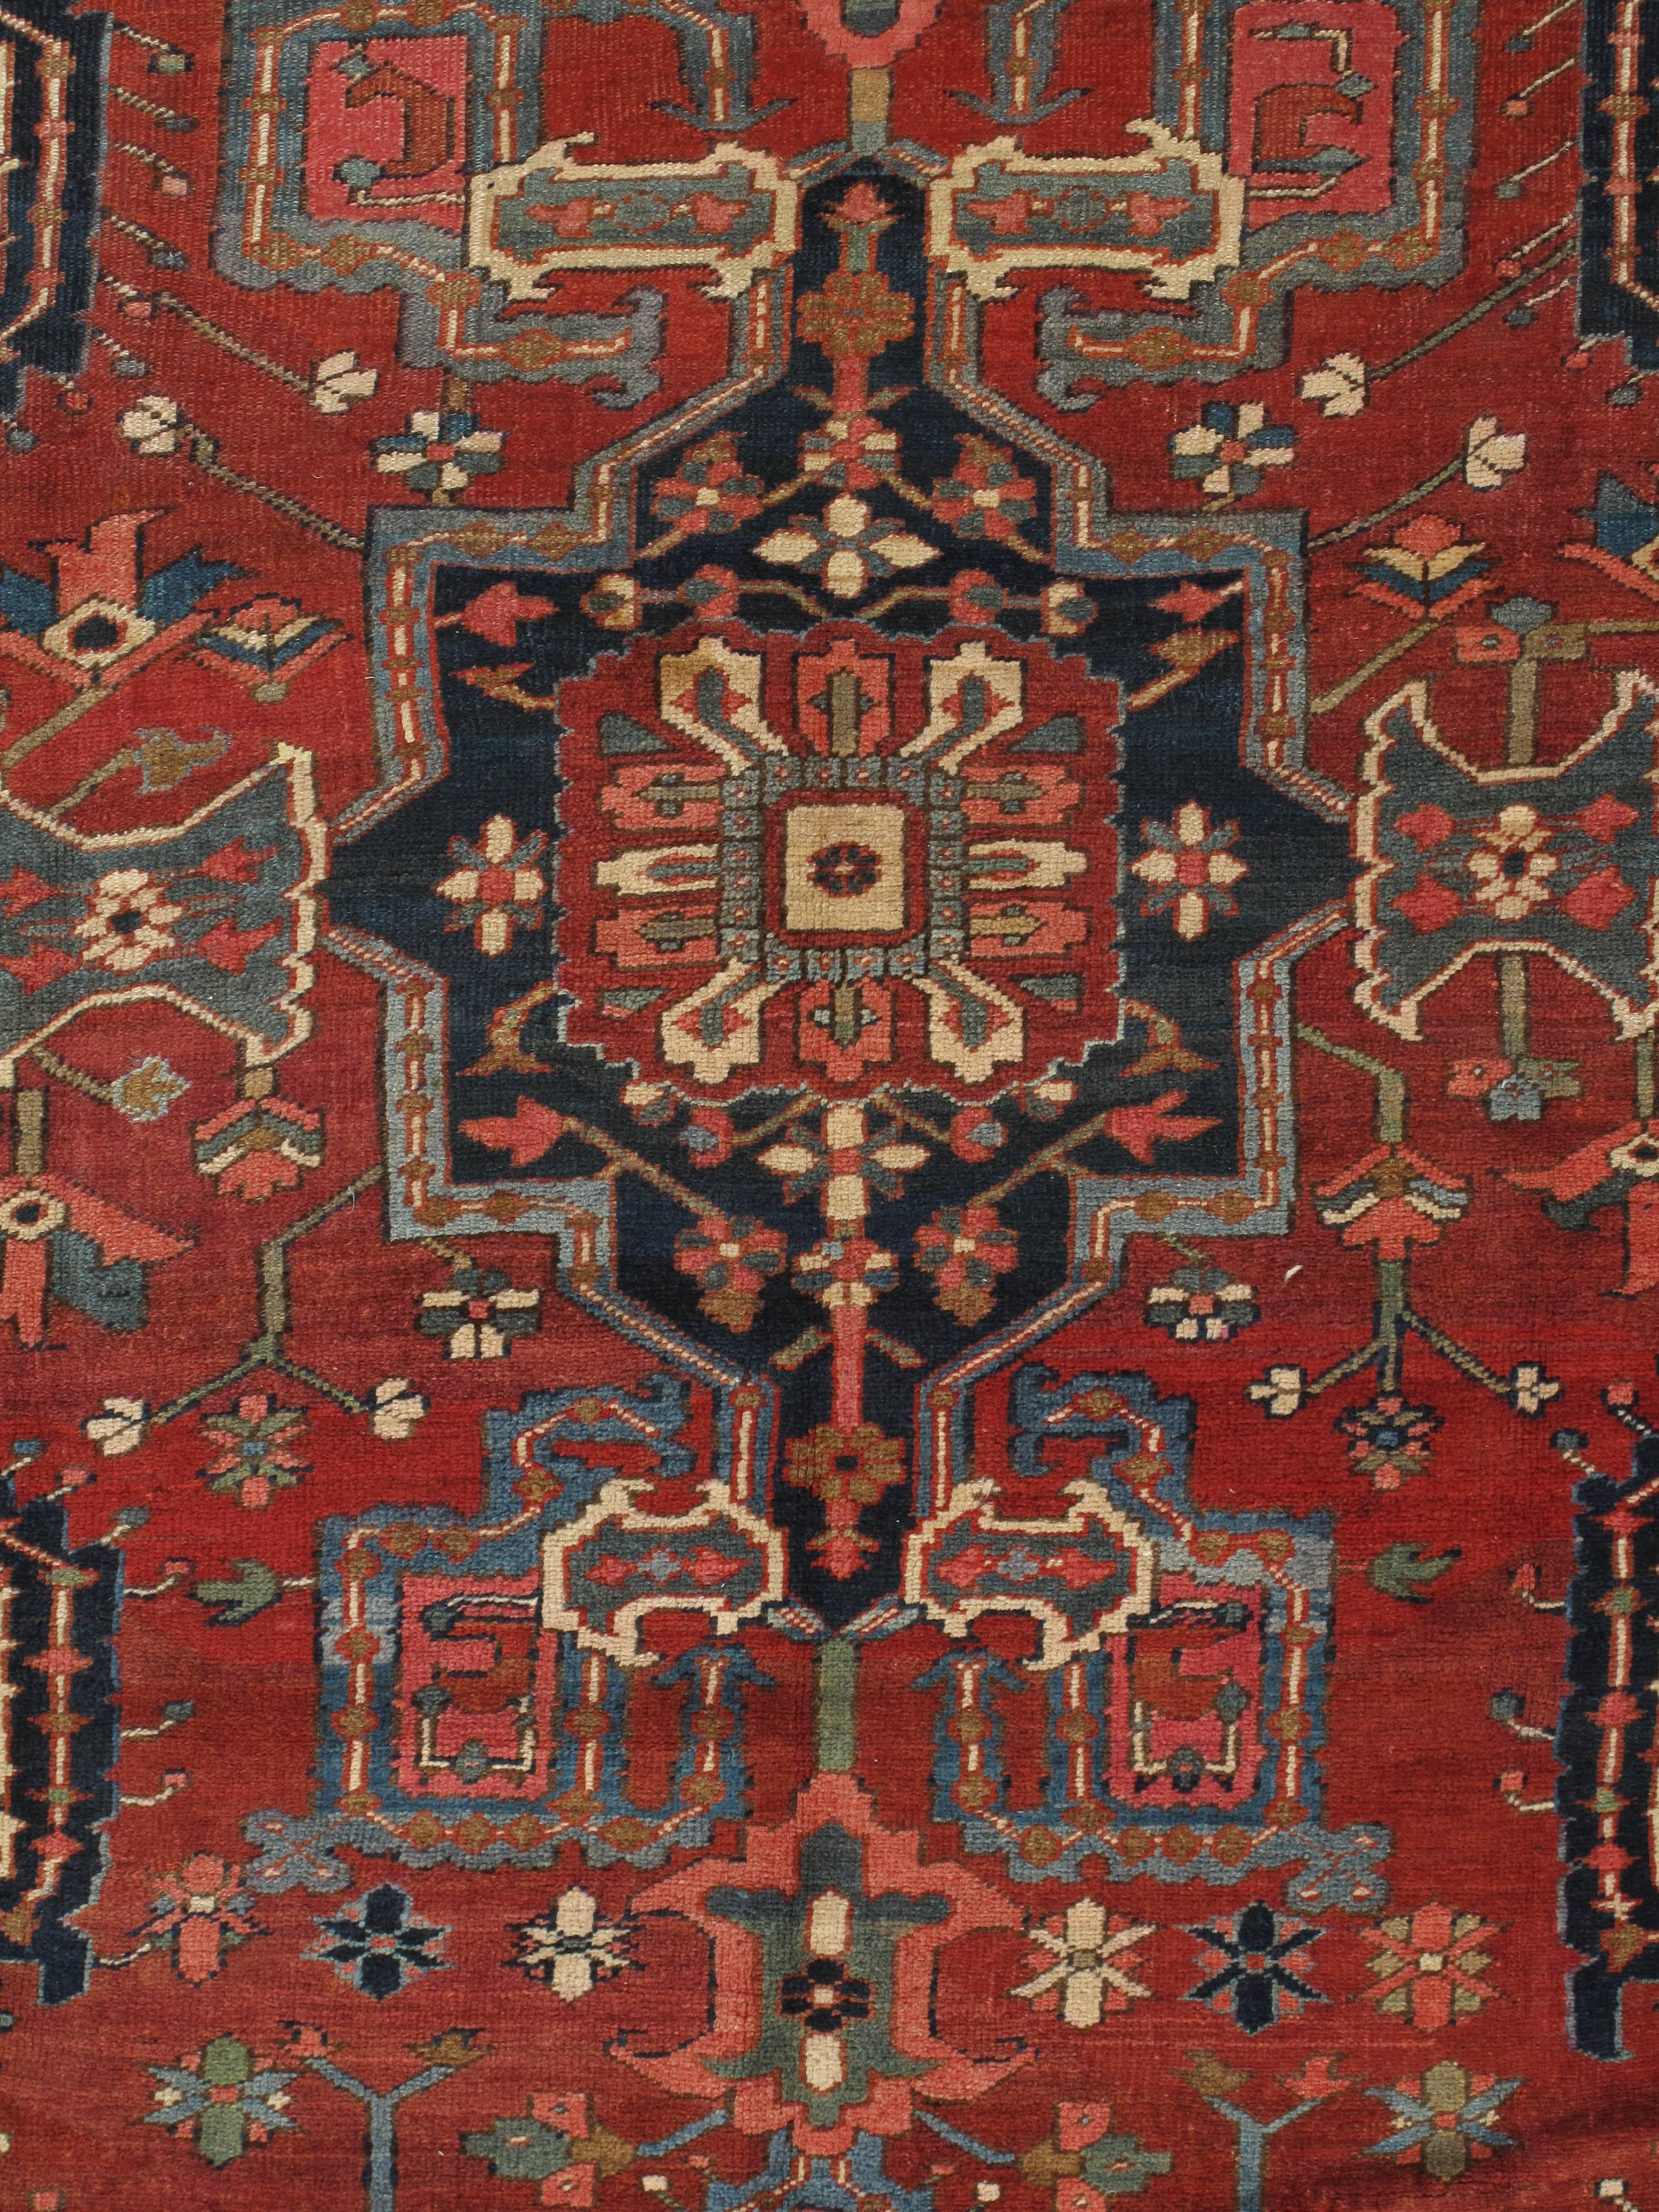 Wool Antique Bakhshaish Carpet, Persian Handmade Rug, Rust, Navy, Ivory, Light Blue